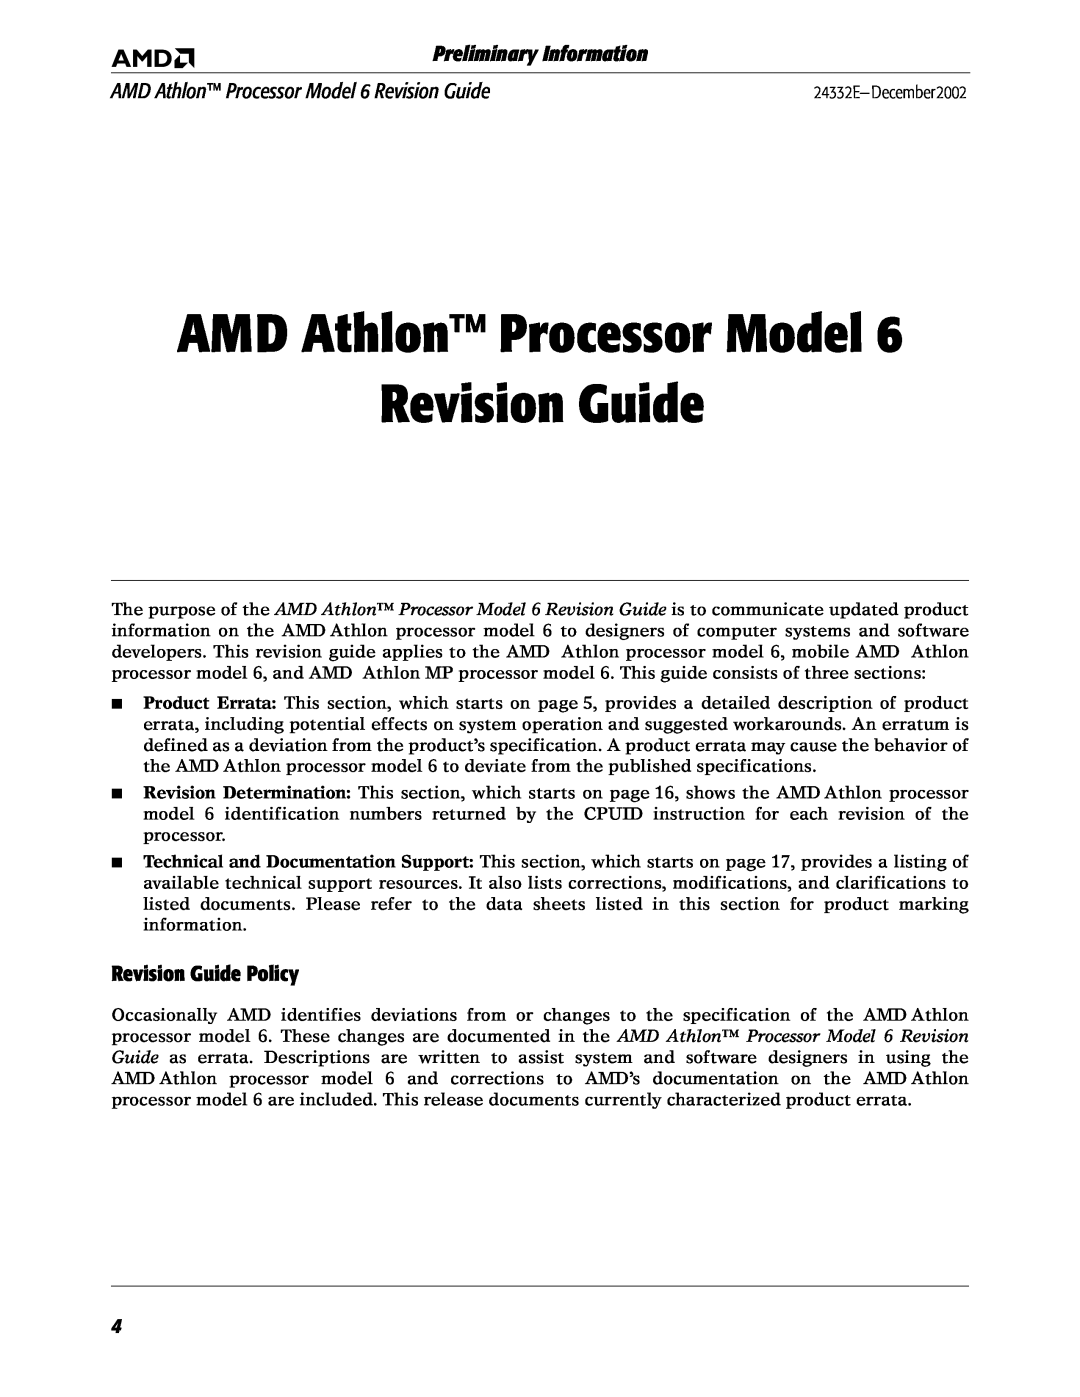 AMD manual AMD Athlon Processor Model 6 Revision Guide, Revision Guide Policy, AMD Athlon Processor Model Revision Guide 